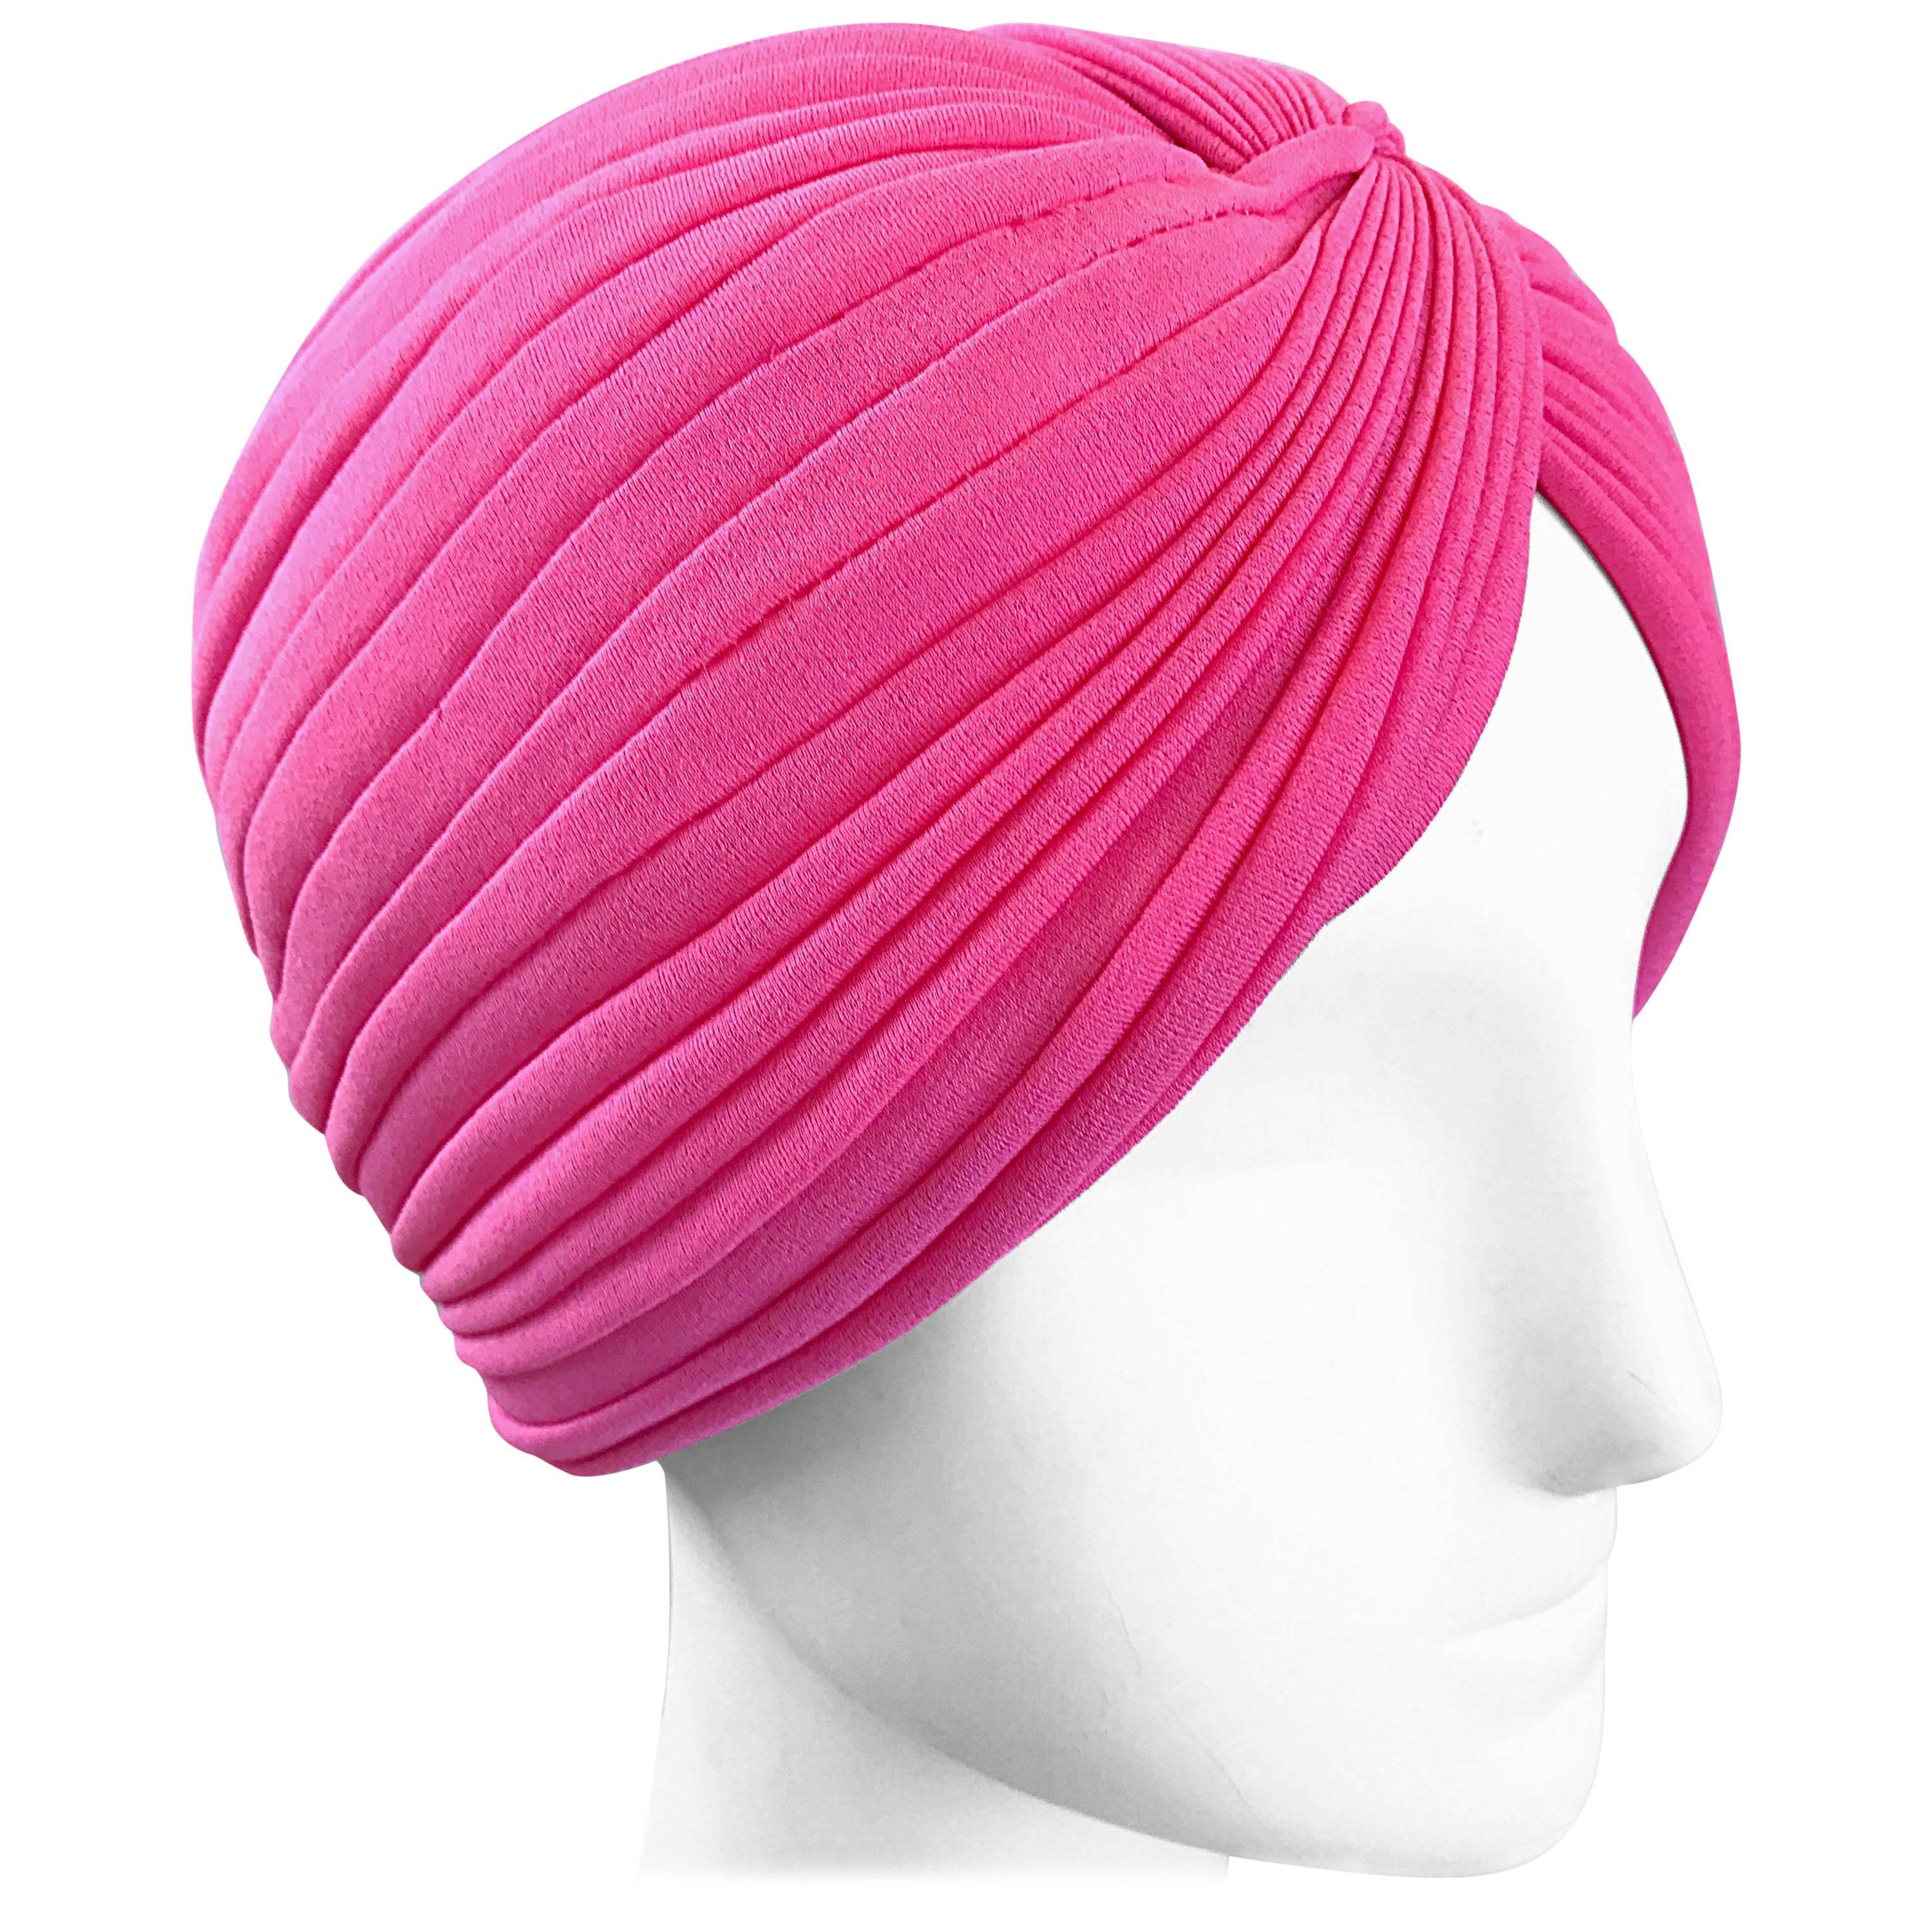 New w/ Tags 1960s Italian One Size Bubblegum Pink Nylon Vintage Turban 60s Hat 